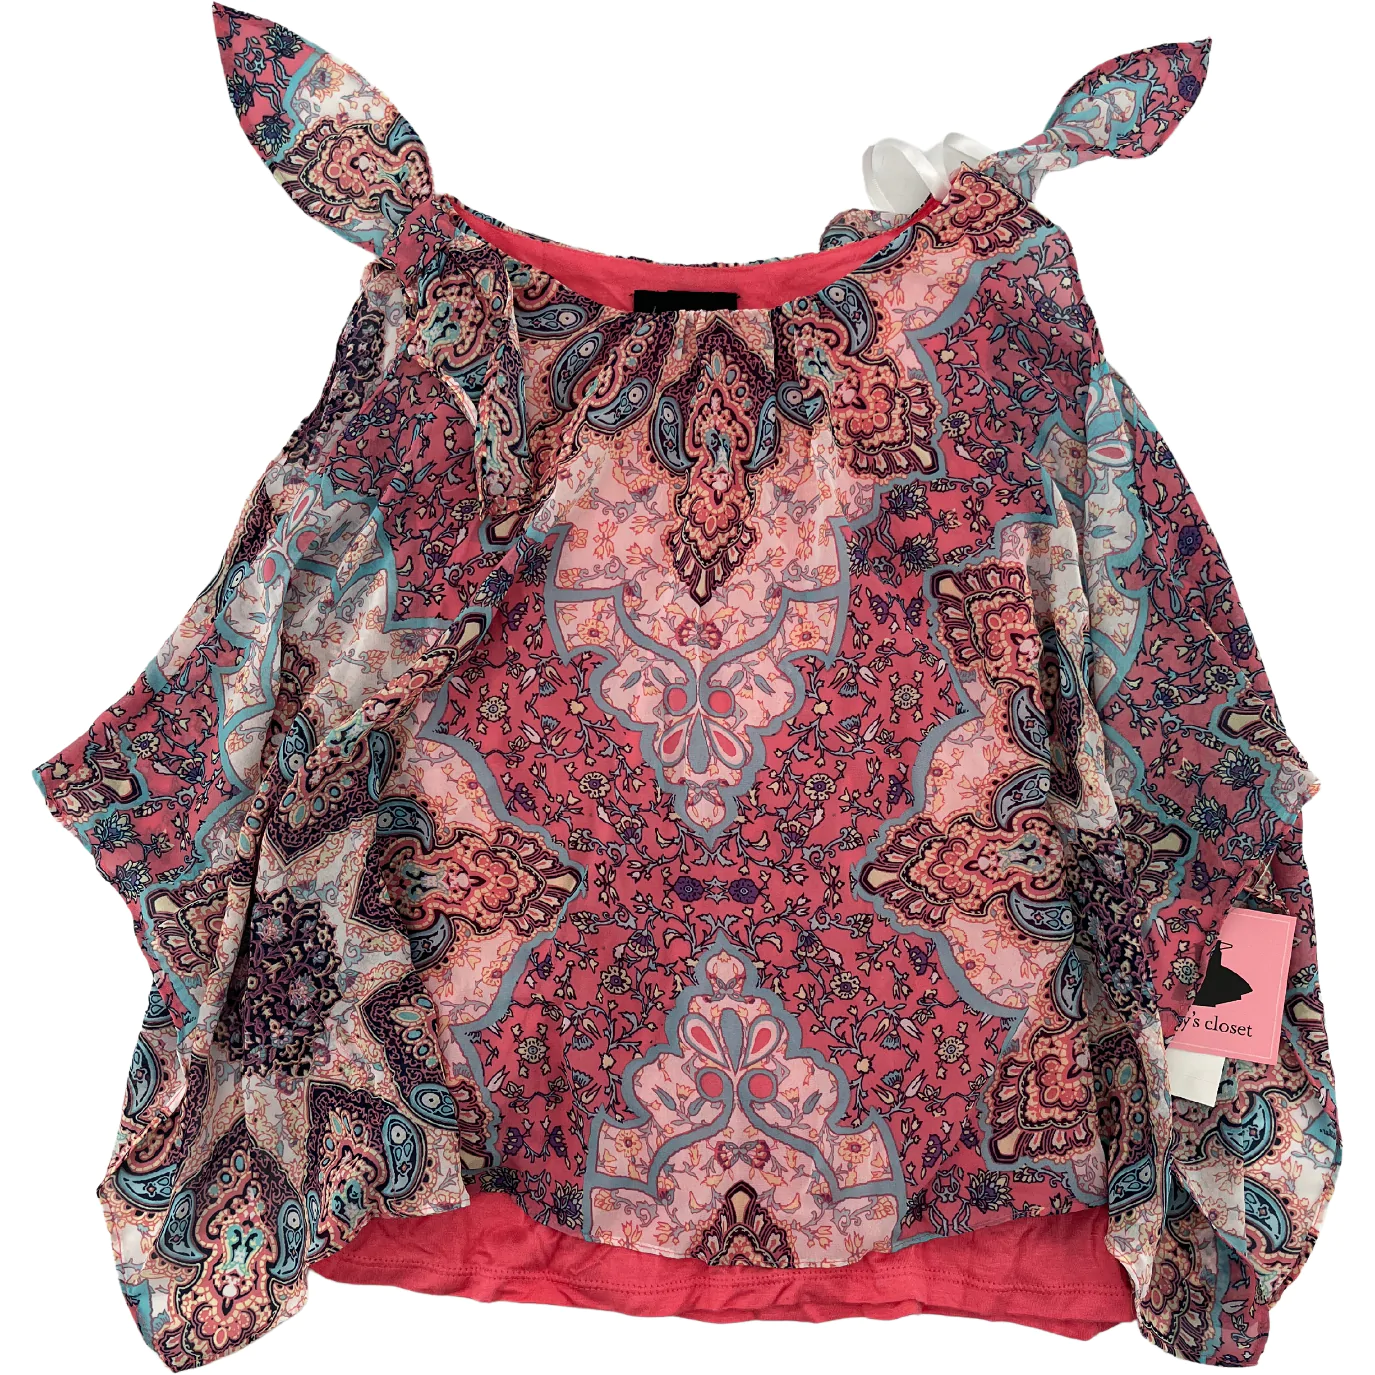 Amy's Closet Girl's Shirt: Sleeveless Top / Summer Top / Size Large